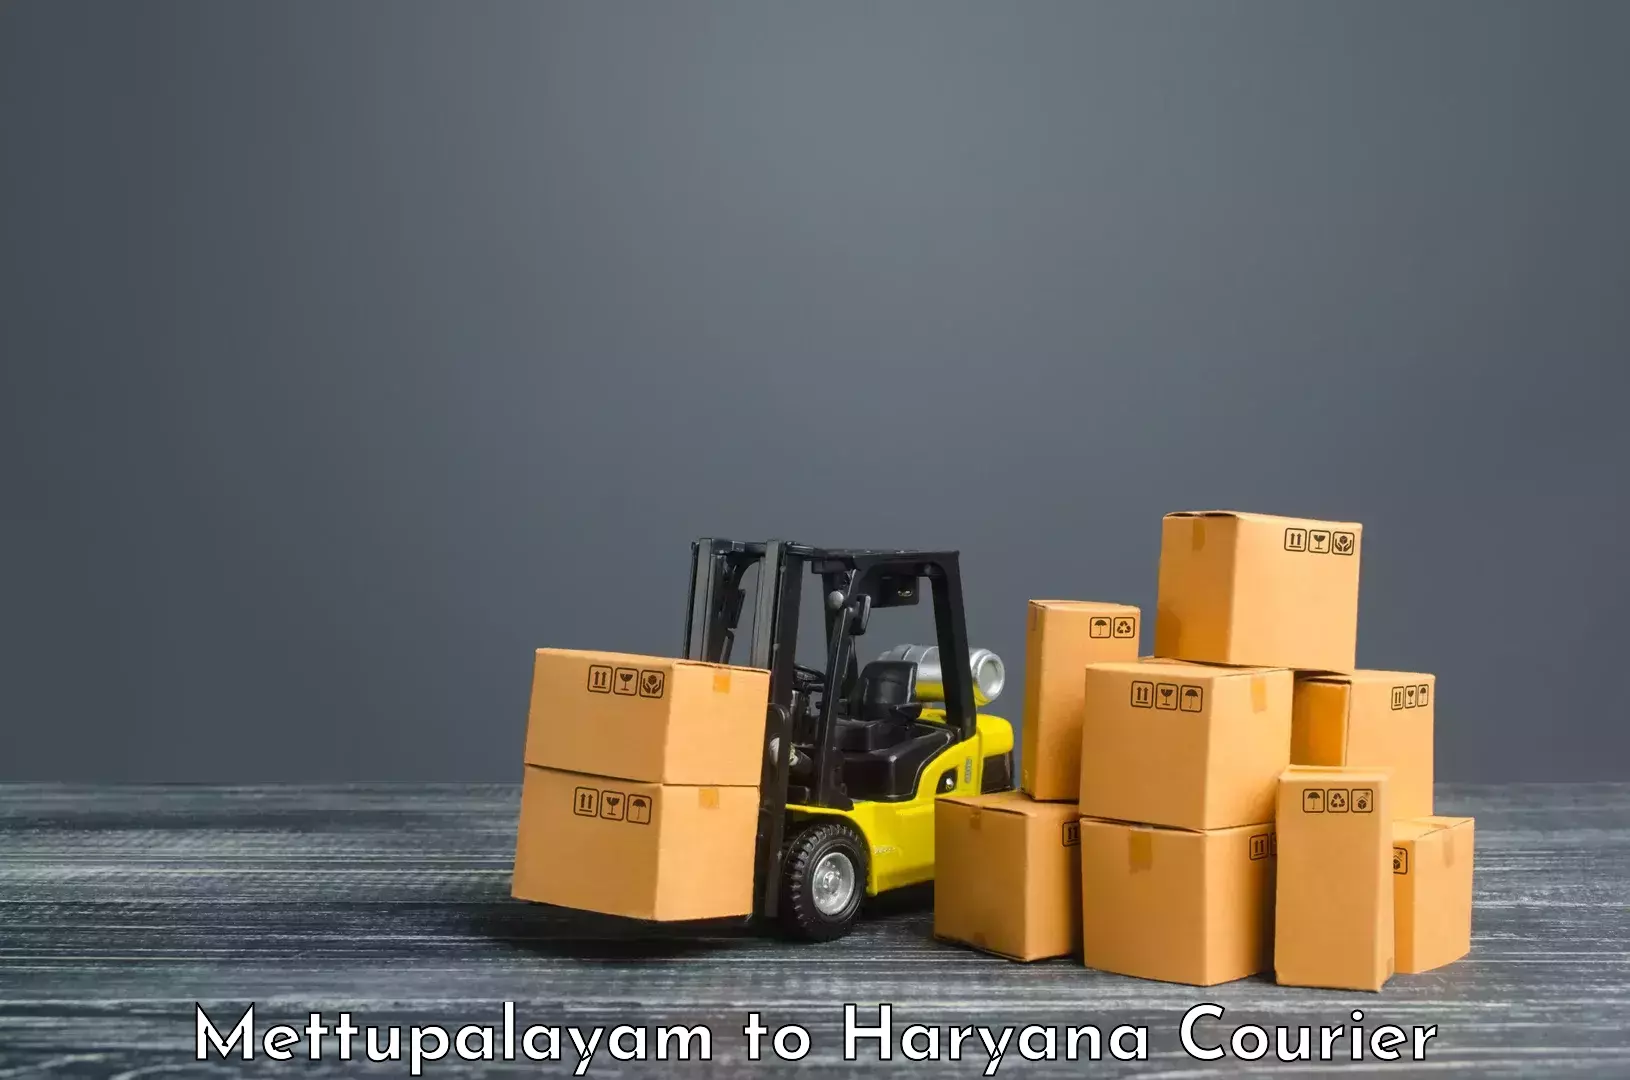 Specialized shipment handling Mettupalayam to NCR Haryana